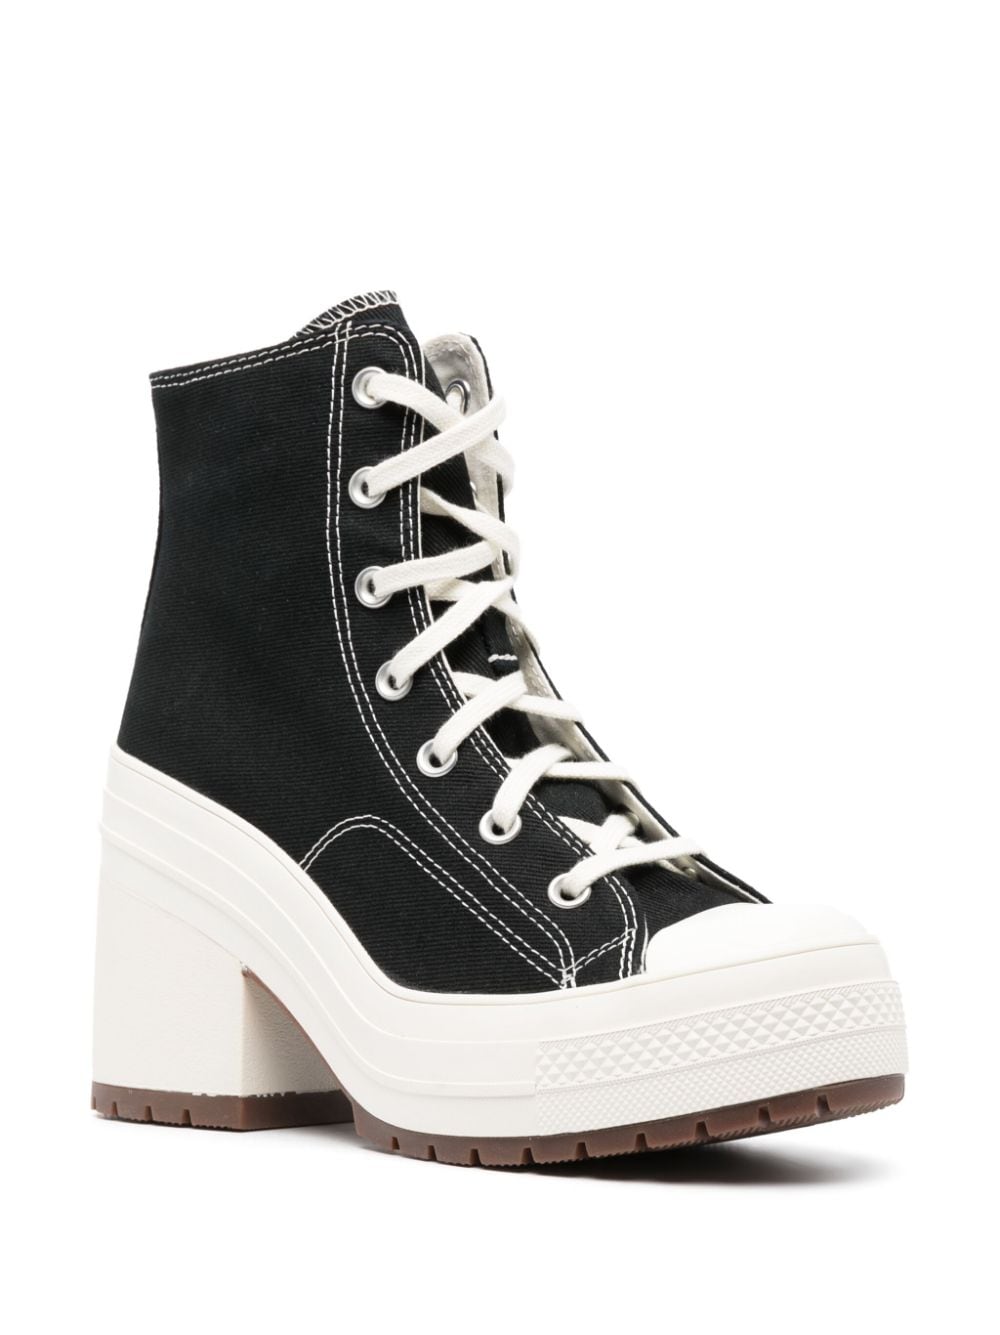 Converse Chuck 70 De Luxe Heeled Sneakers In Black | ModeSens